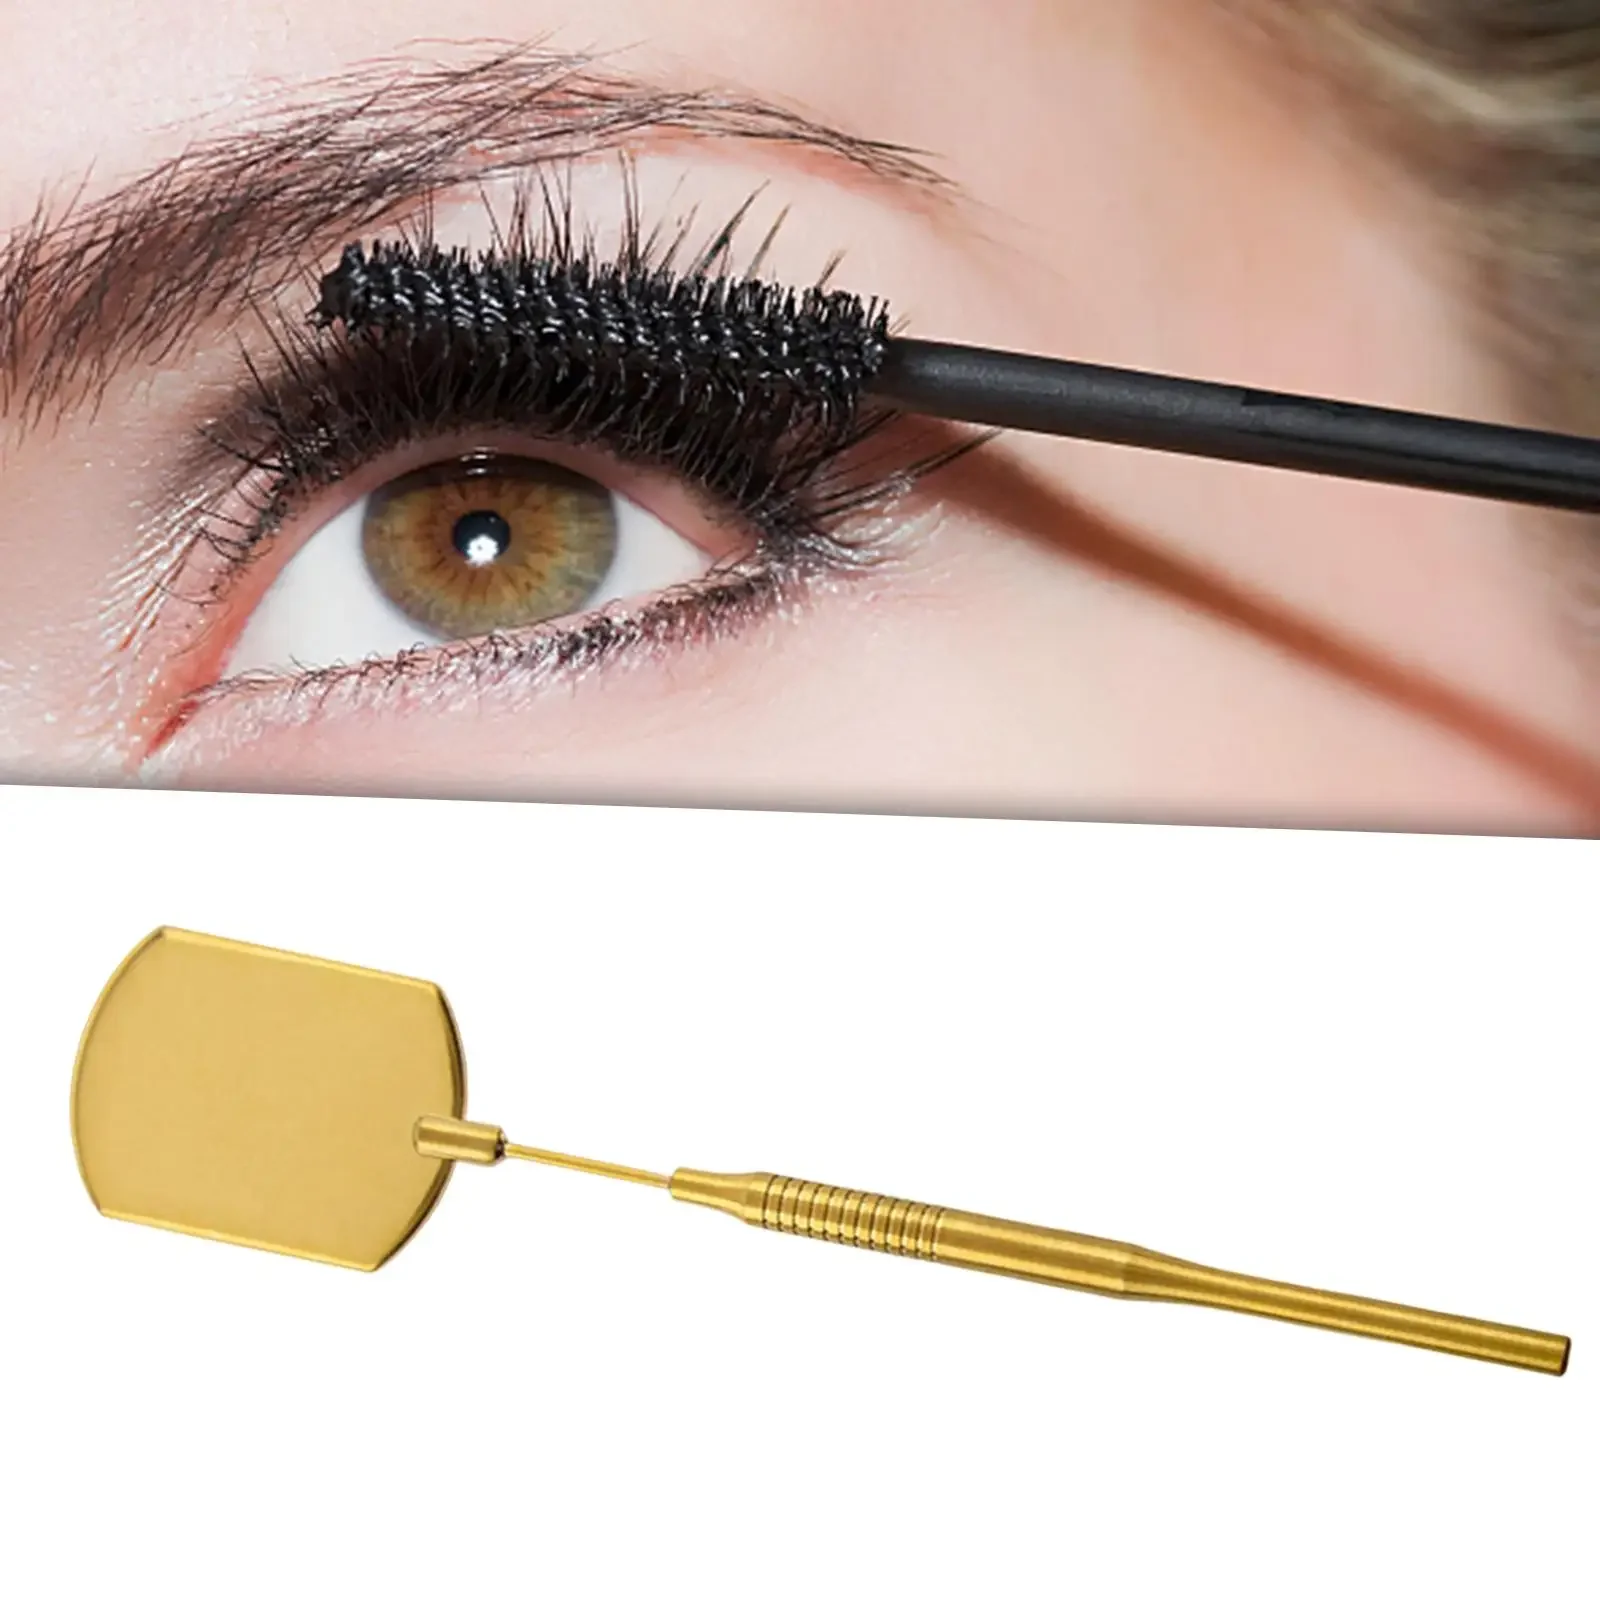 Lash Mirror Eyelash Extensions Tools Square Mirror Eyes Makeup Supplies Sturdy Rotating for Various Angles Length 20.8cm